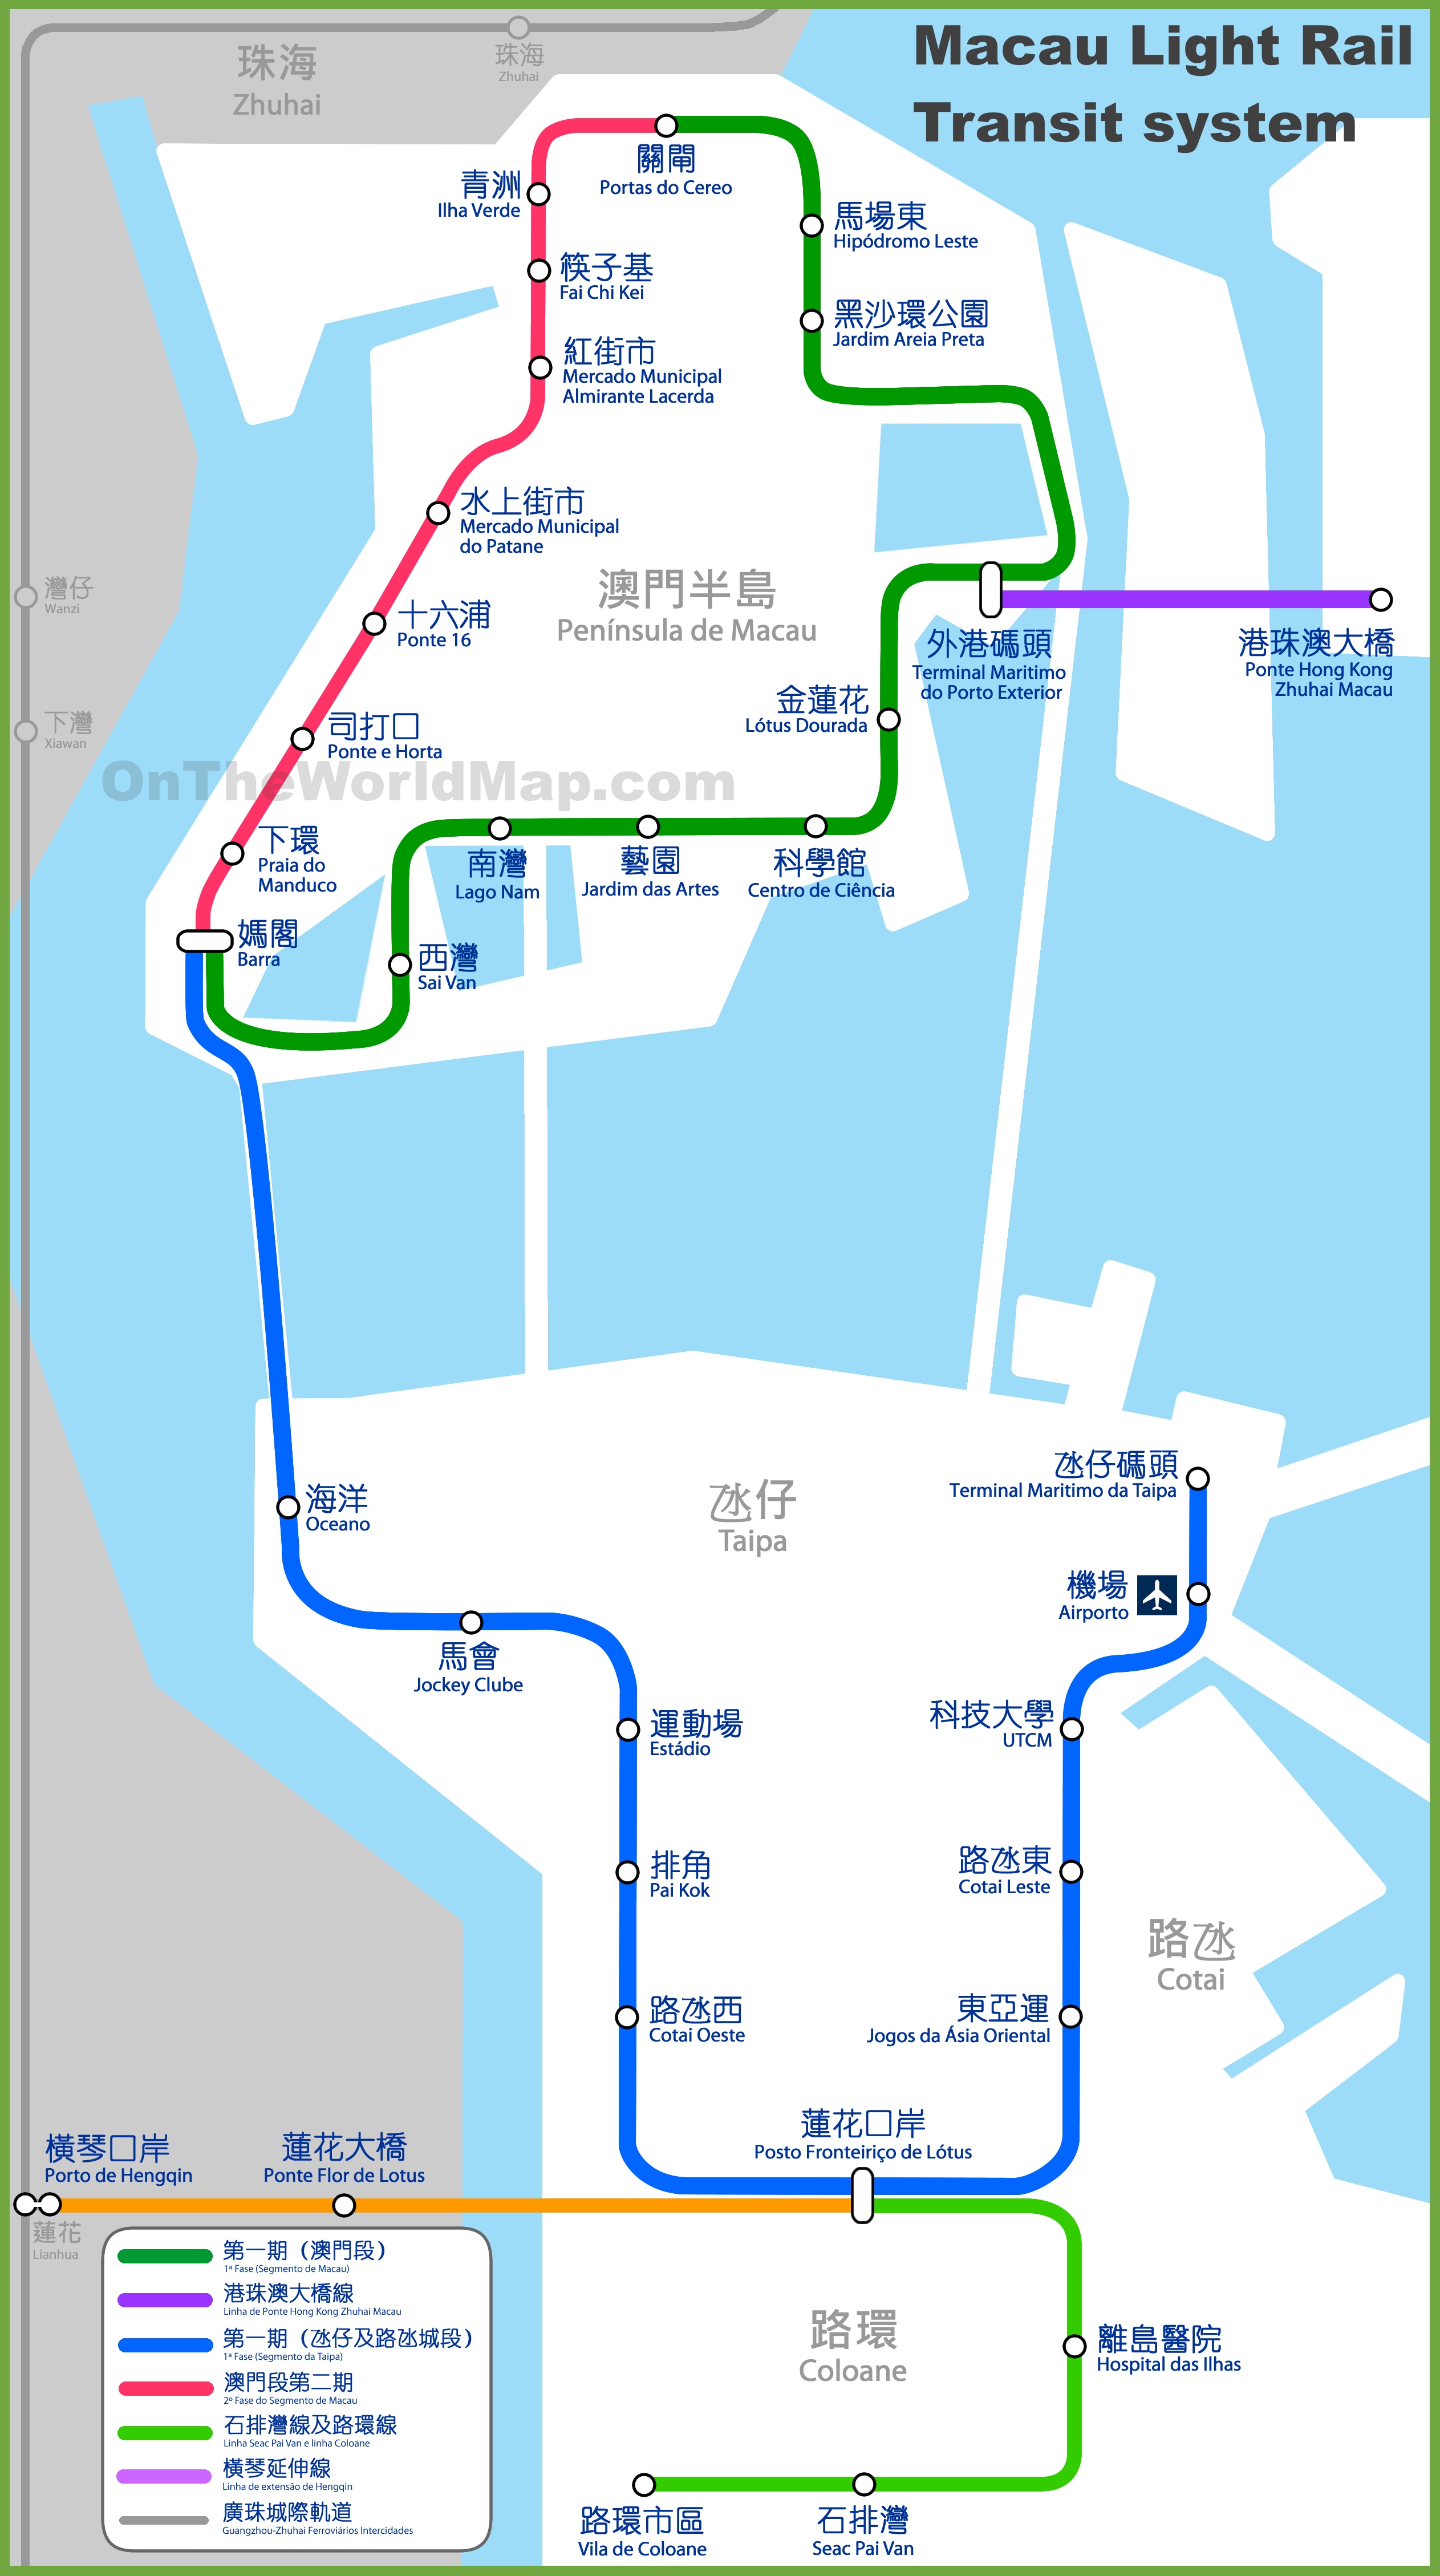 macau-light-rail-transit-system-map.jpg